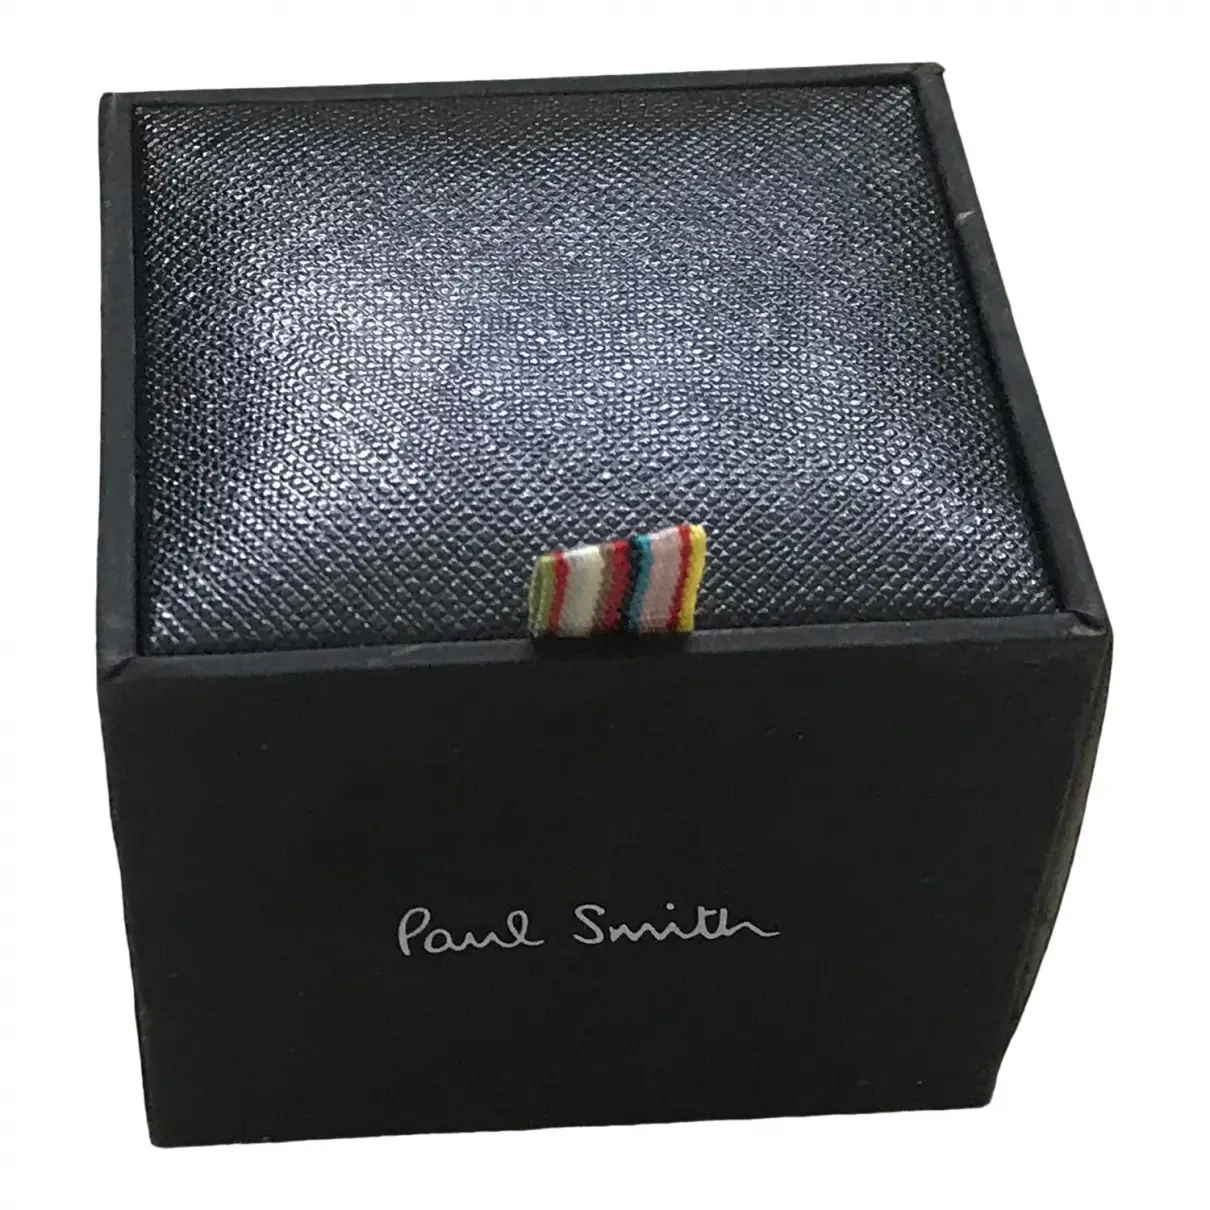 Buy Paul Smith Cufflinks online